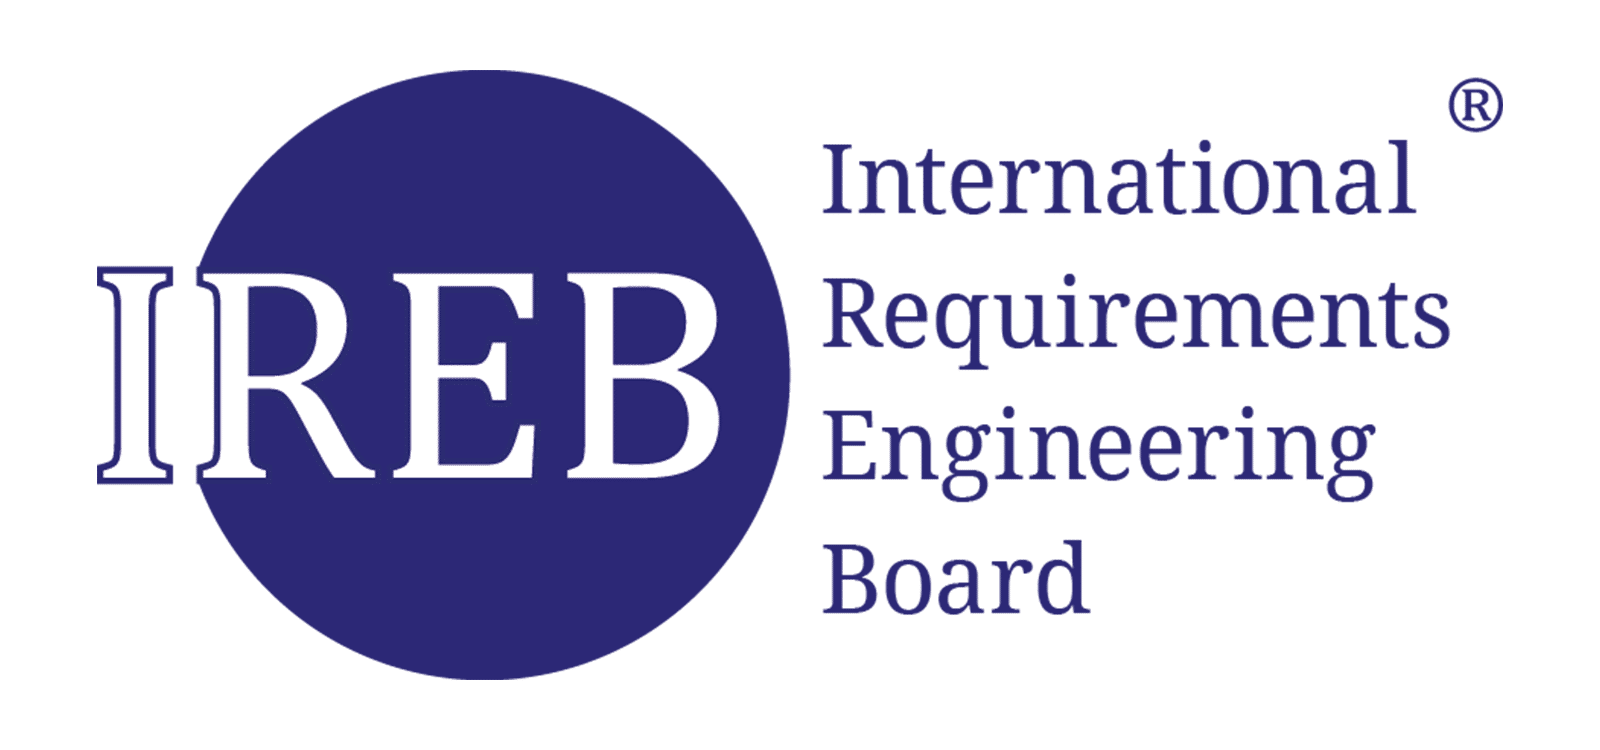 International Requirements Engineering Board (IREB)